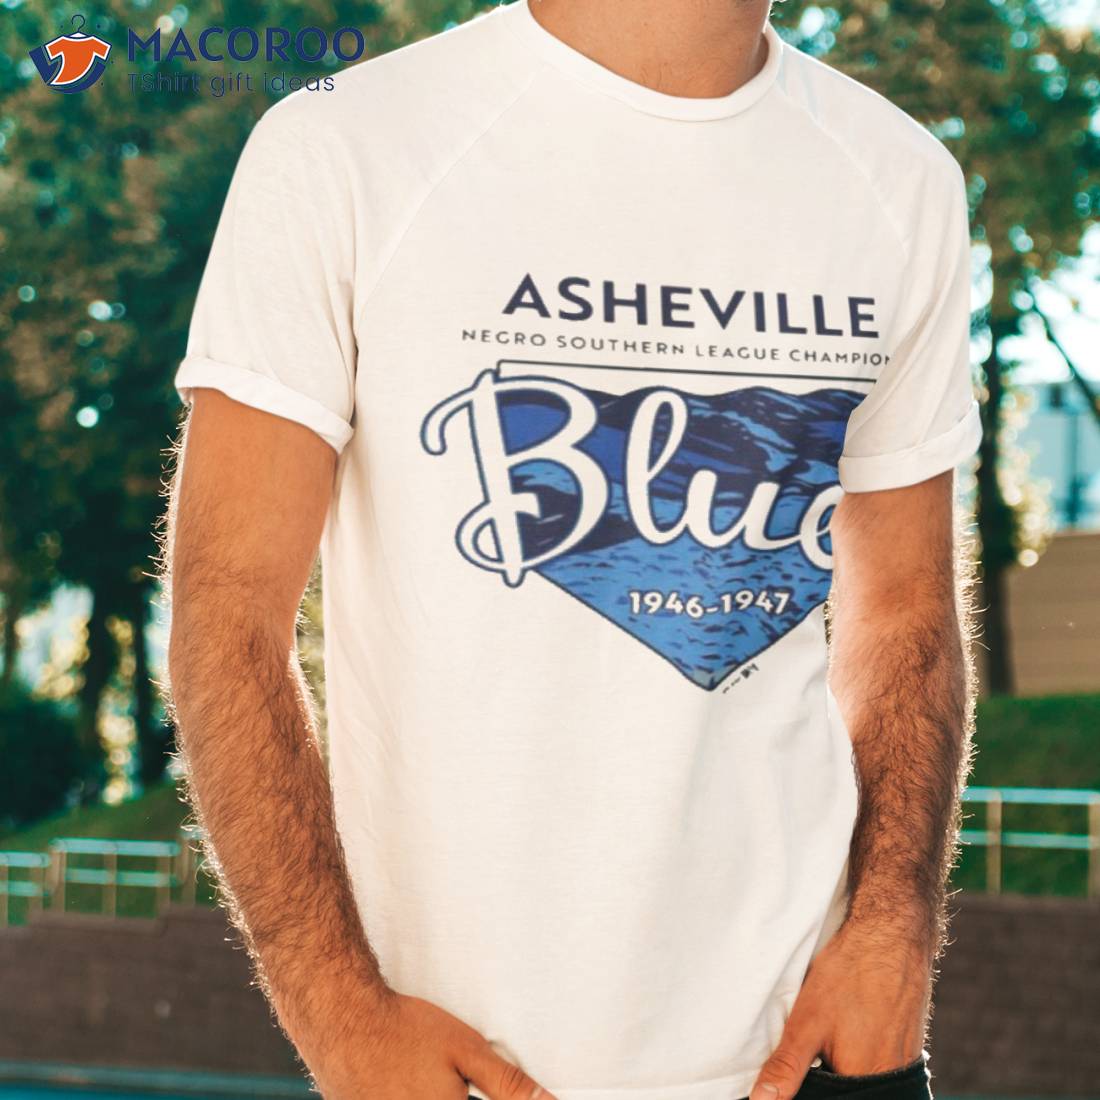 Asheville Blues Negro Southern League Champions Shirt